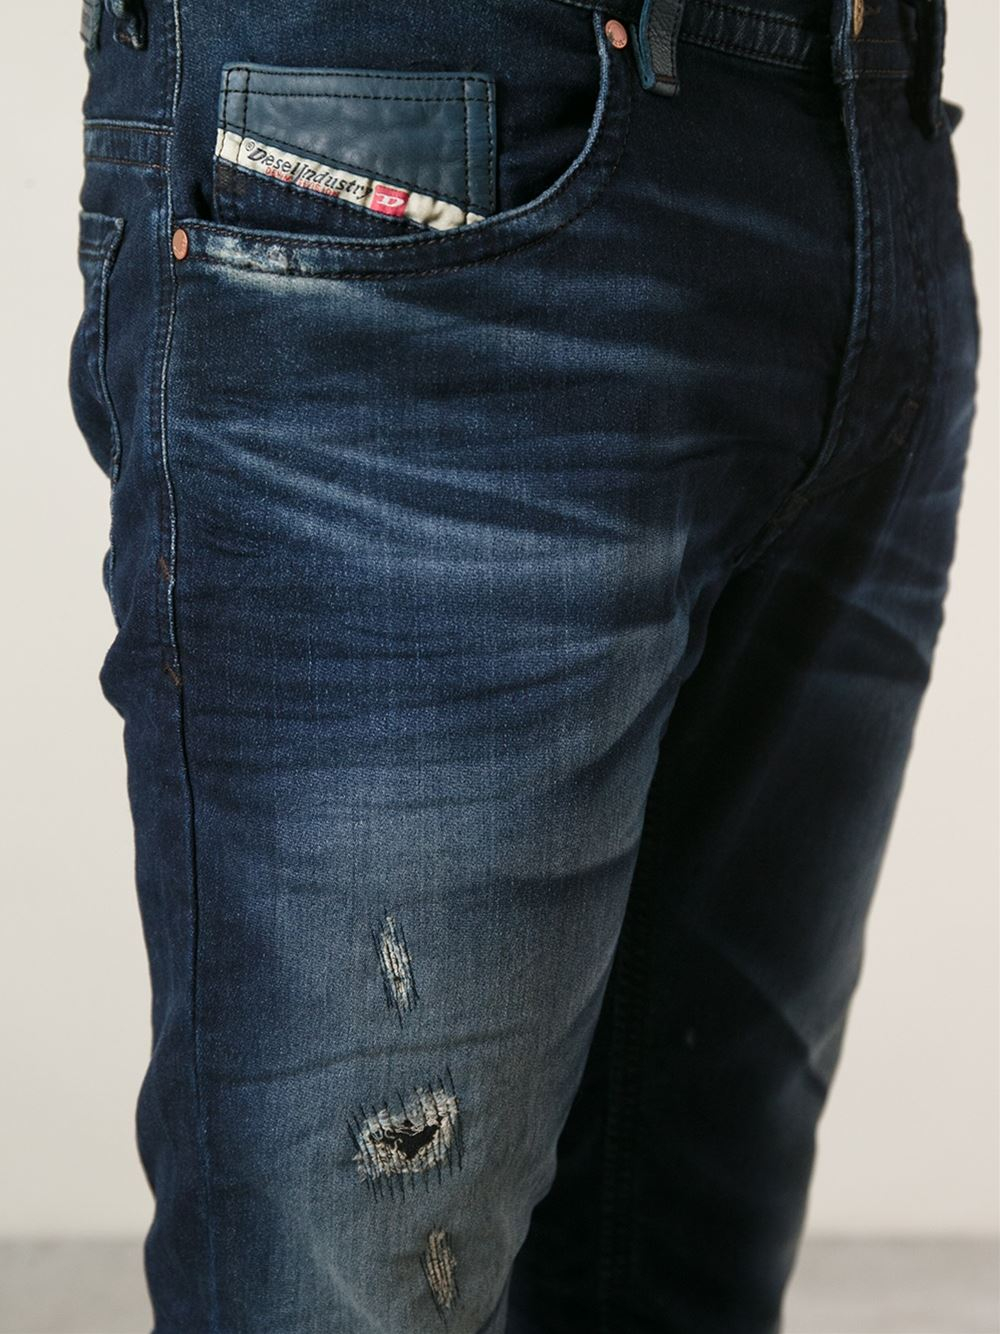 DIESEL 'Thavar' Slim Fit Jeans in Blue for Men - Lyst